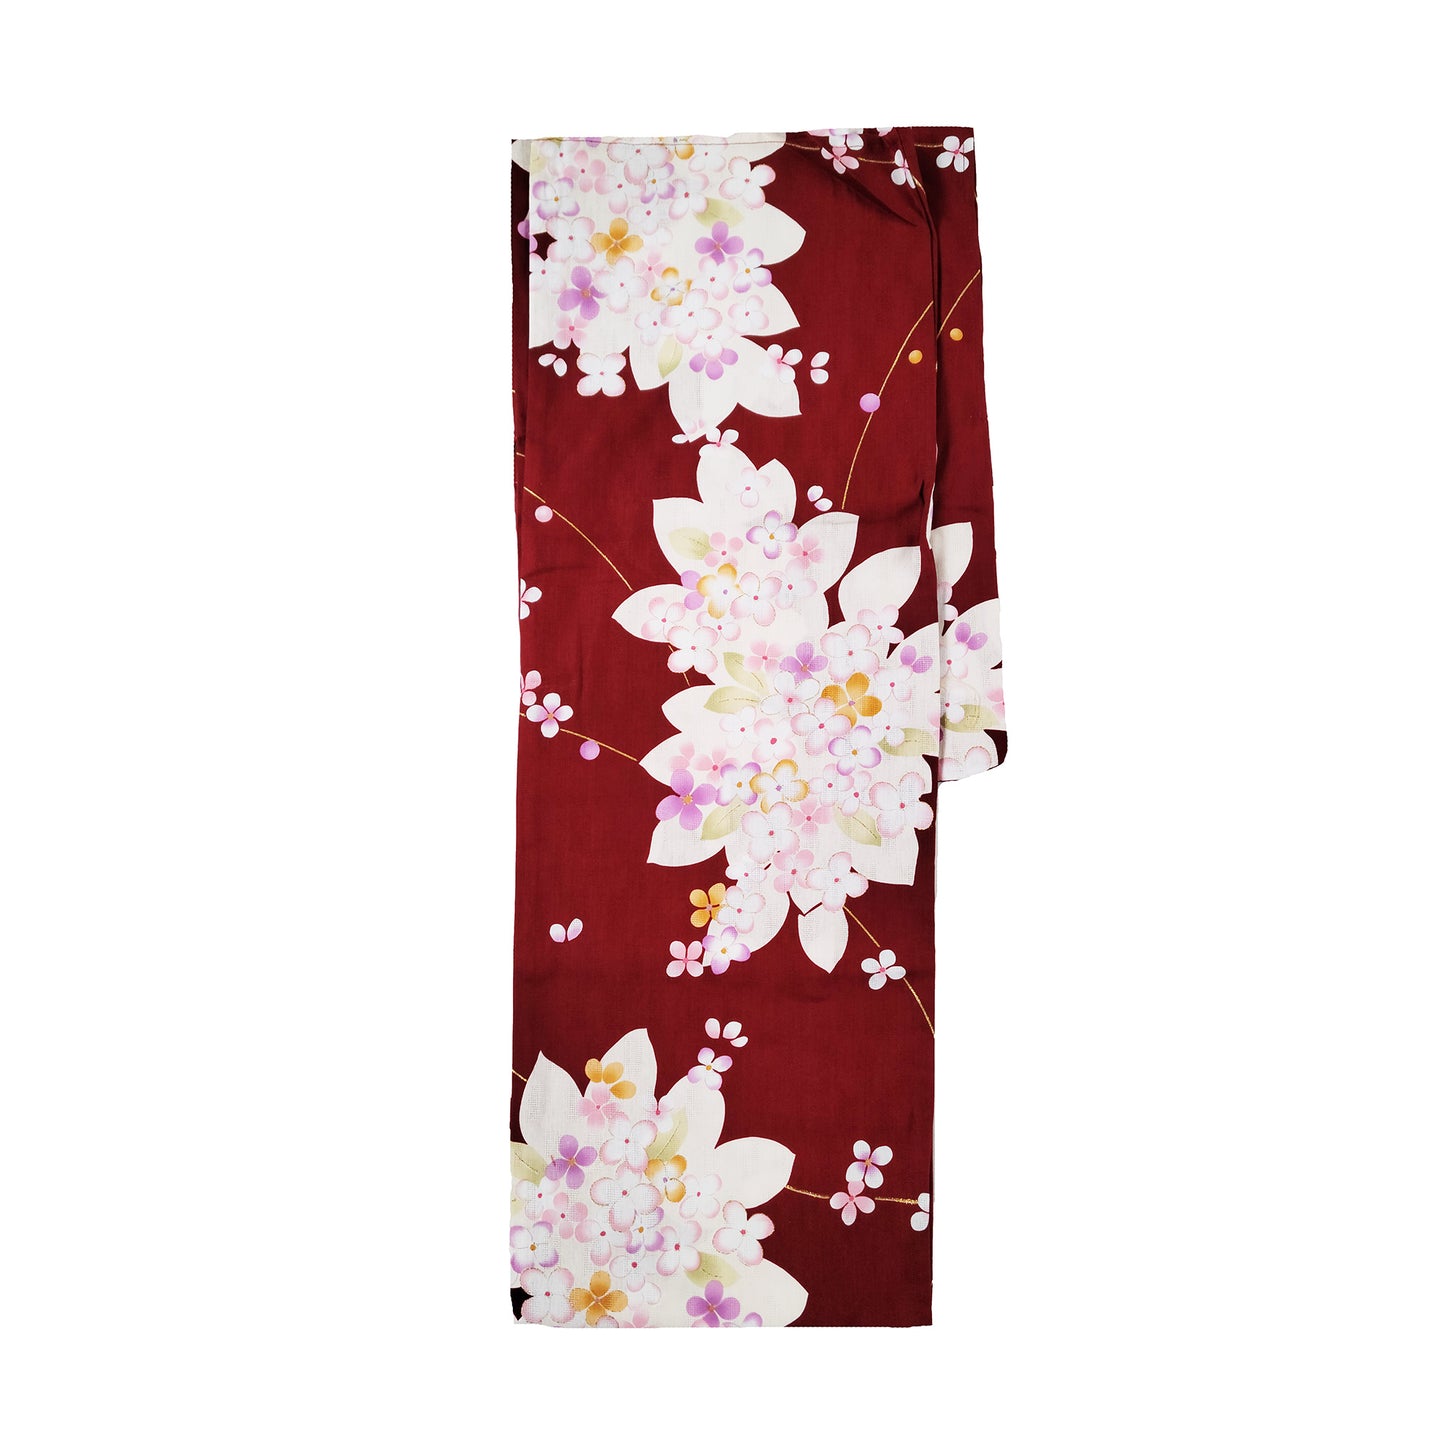 Women's Japanese Traditional Yukata Kimono - Little Flowers in Maroon